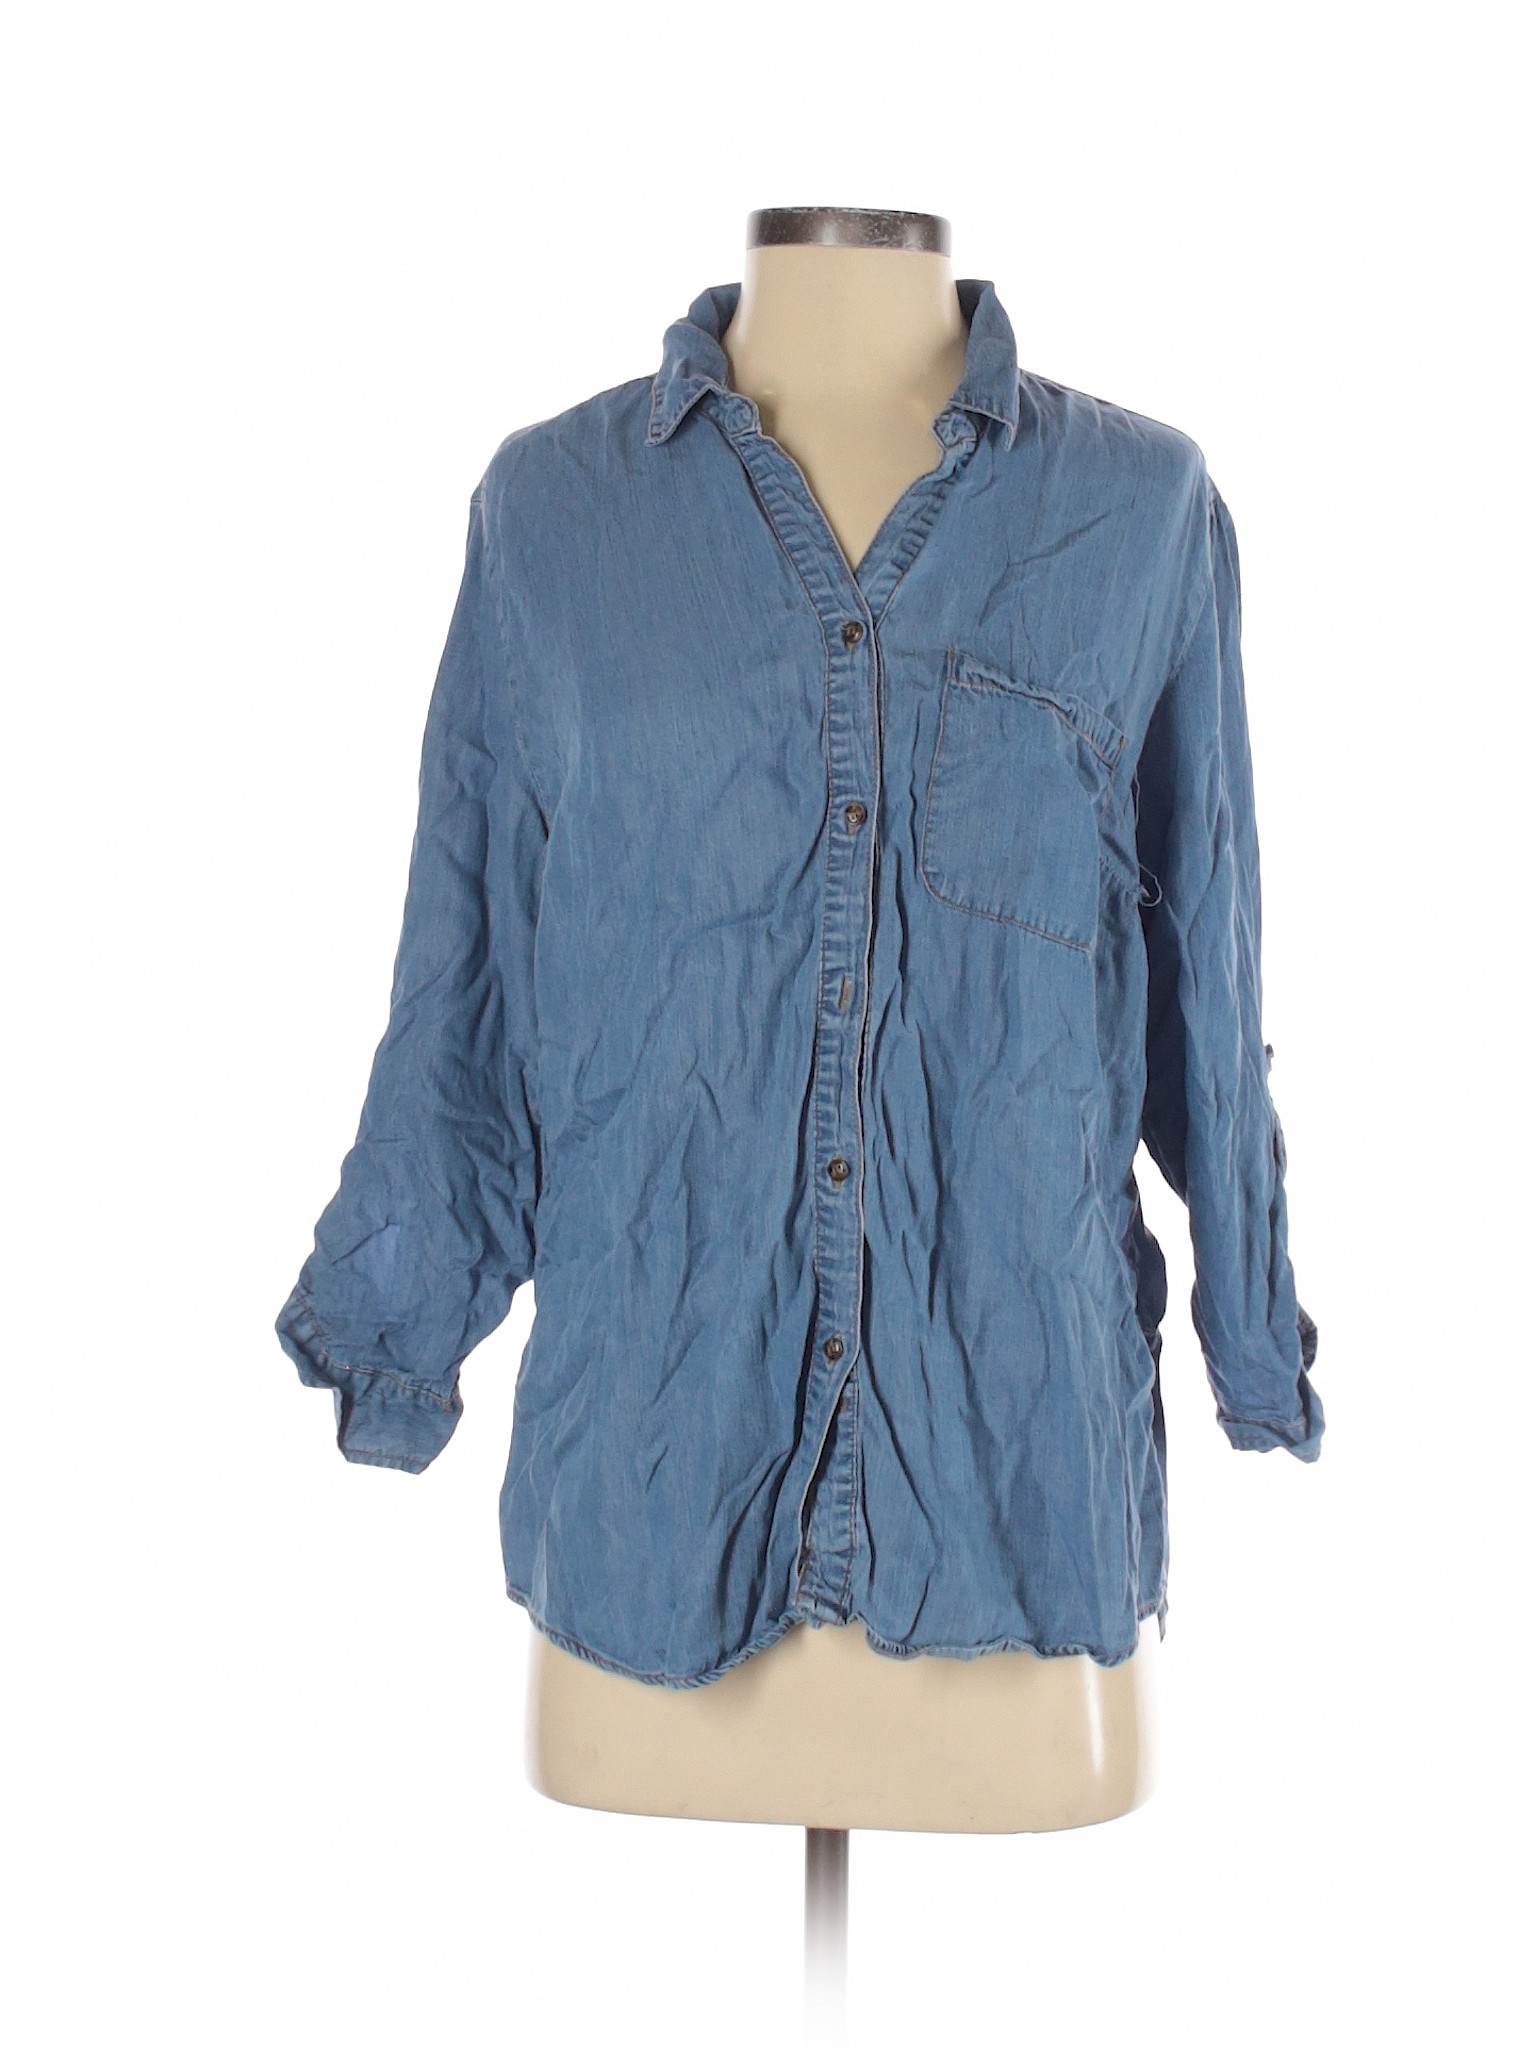 Grand & greene Women Blue 3/4 Sleeve Button-Down Shirt S | eBay